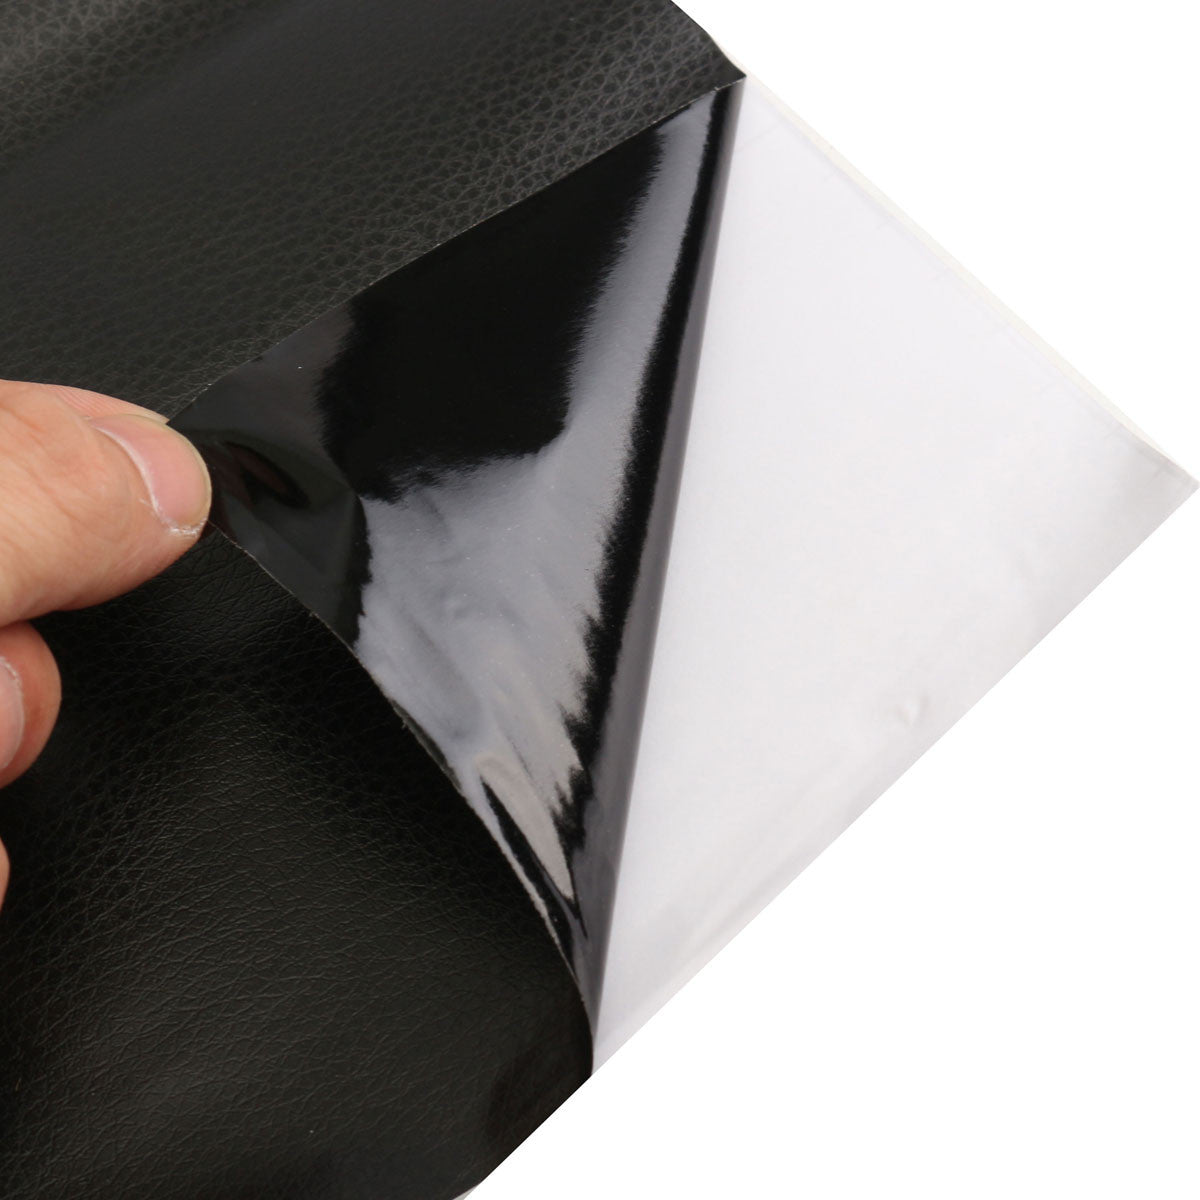 Lavender 3D Black Texture Sheet Car Auto Interior Trim Vinyl Film Wrap Sticker